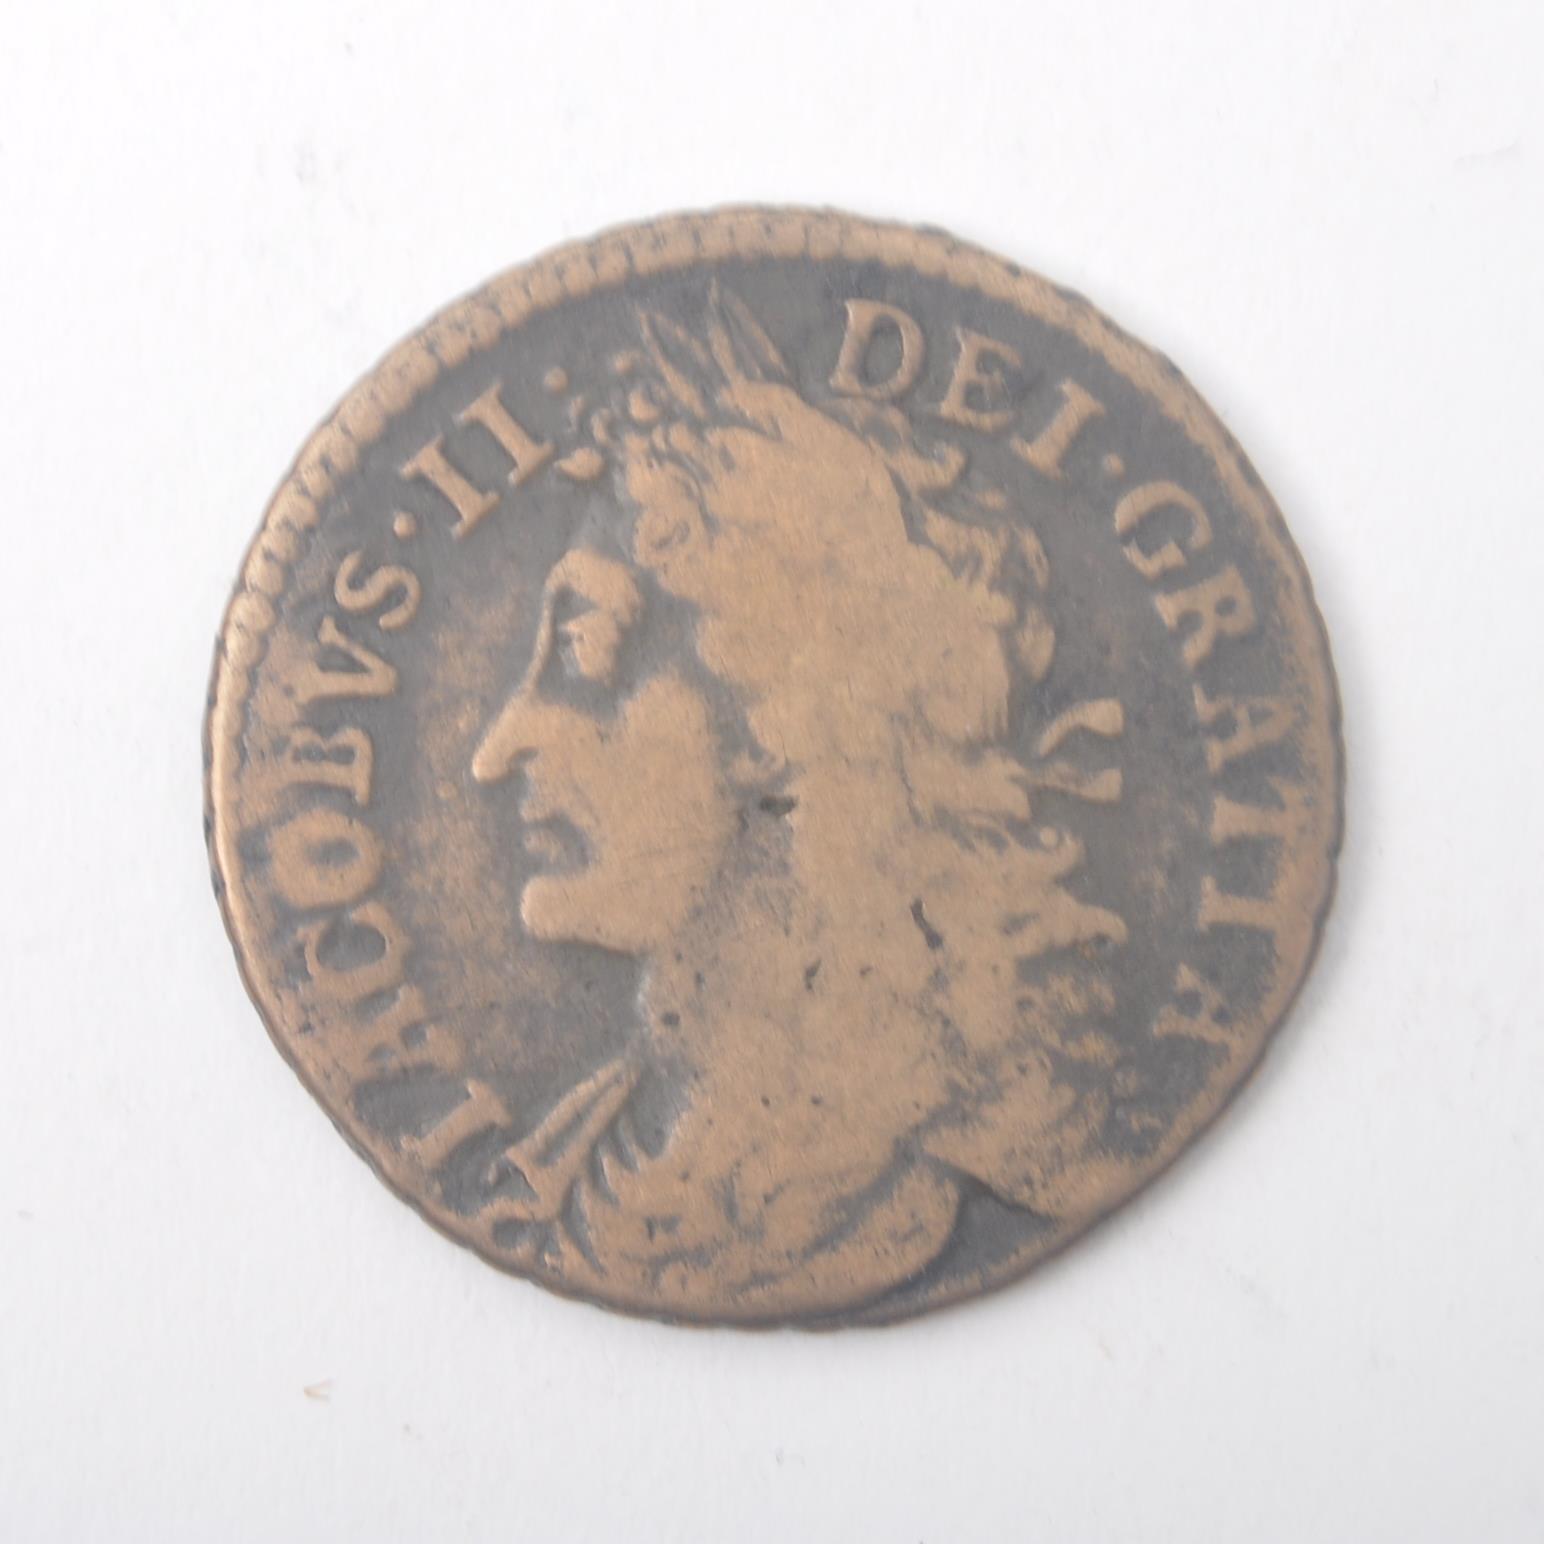 JAMES II 1689 GUN MONEY HALF CROWN COIN